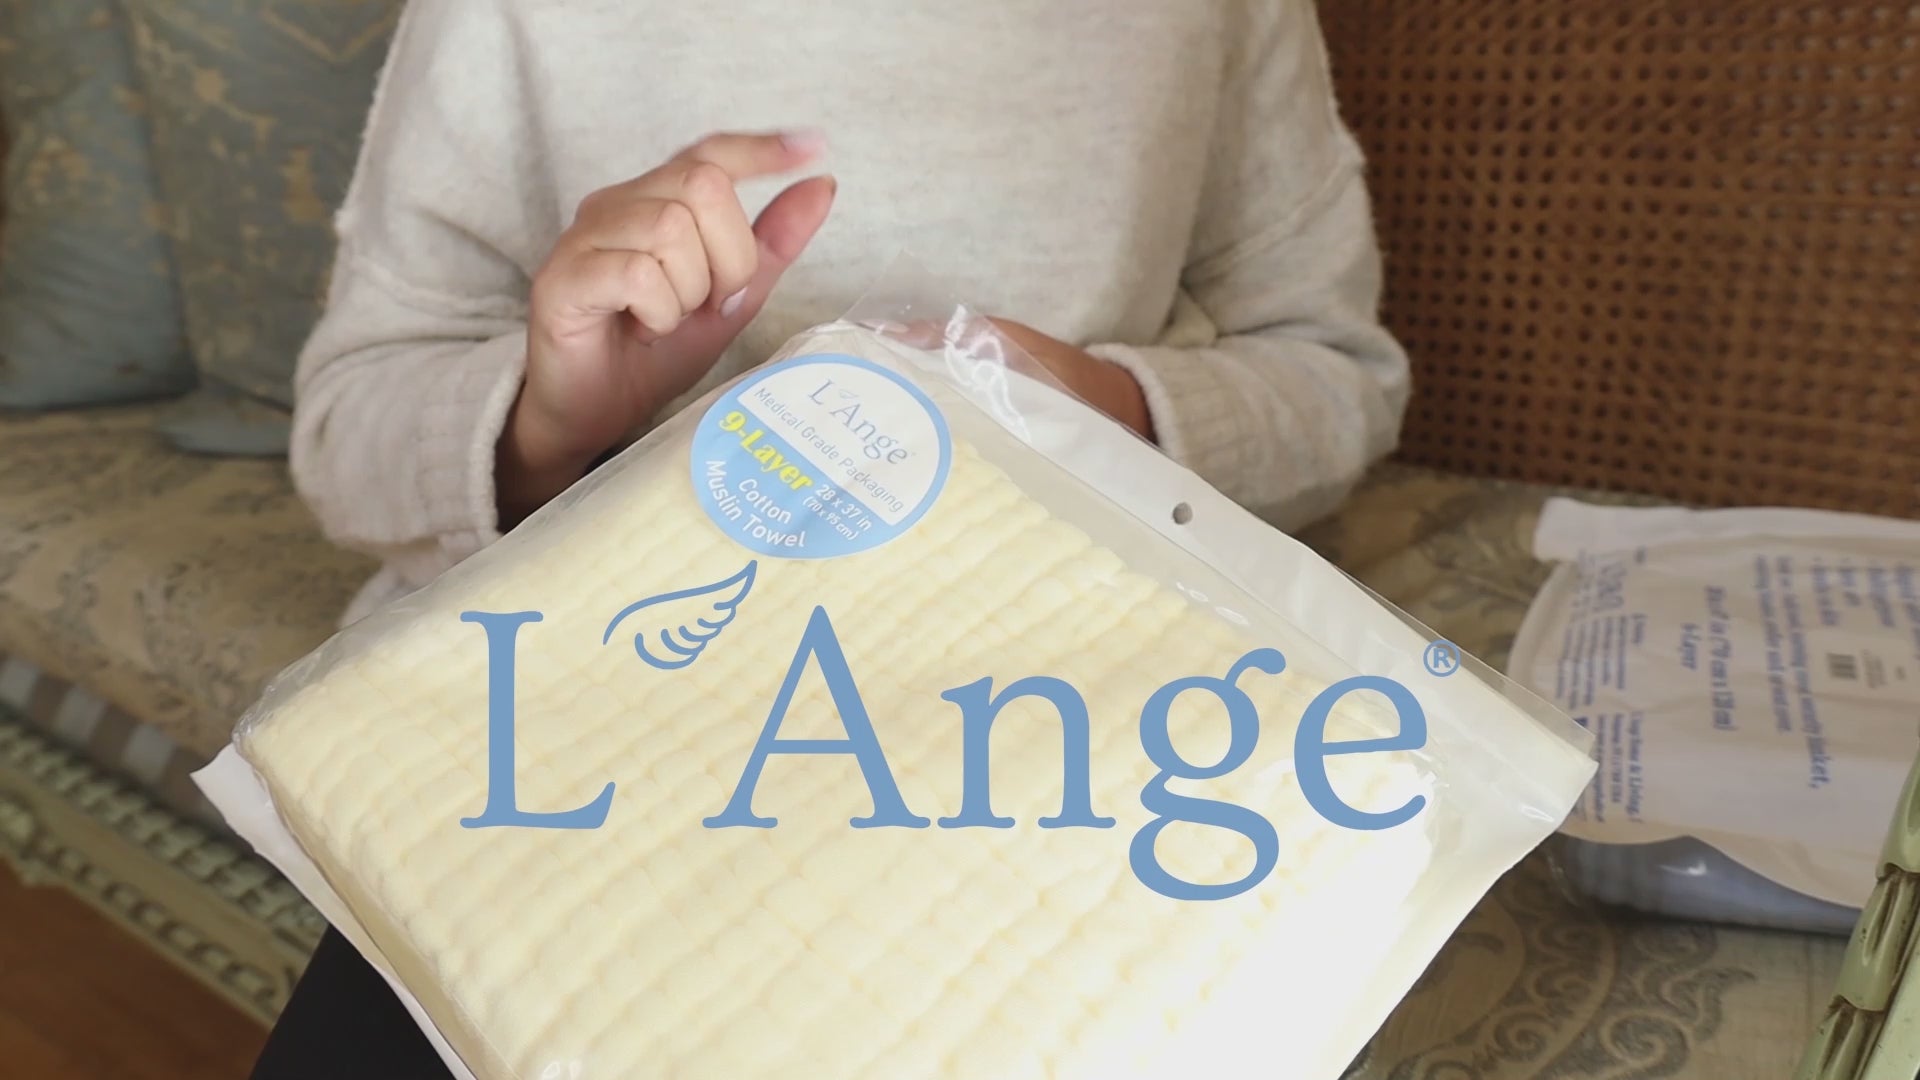 L'Ange Baby 6-Layer Small Cotton Muslin Bath Towel